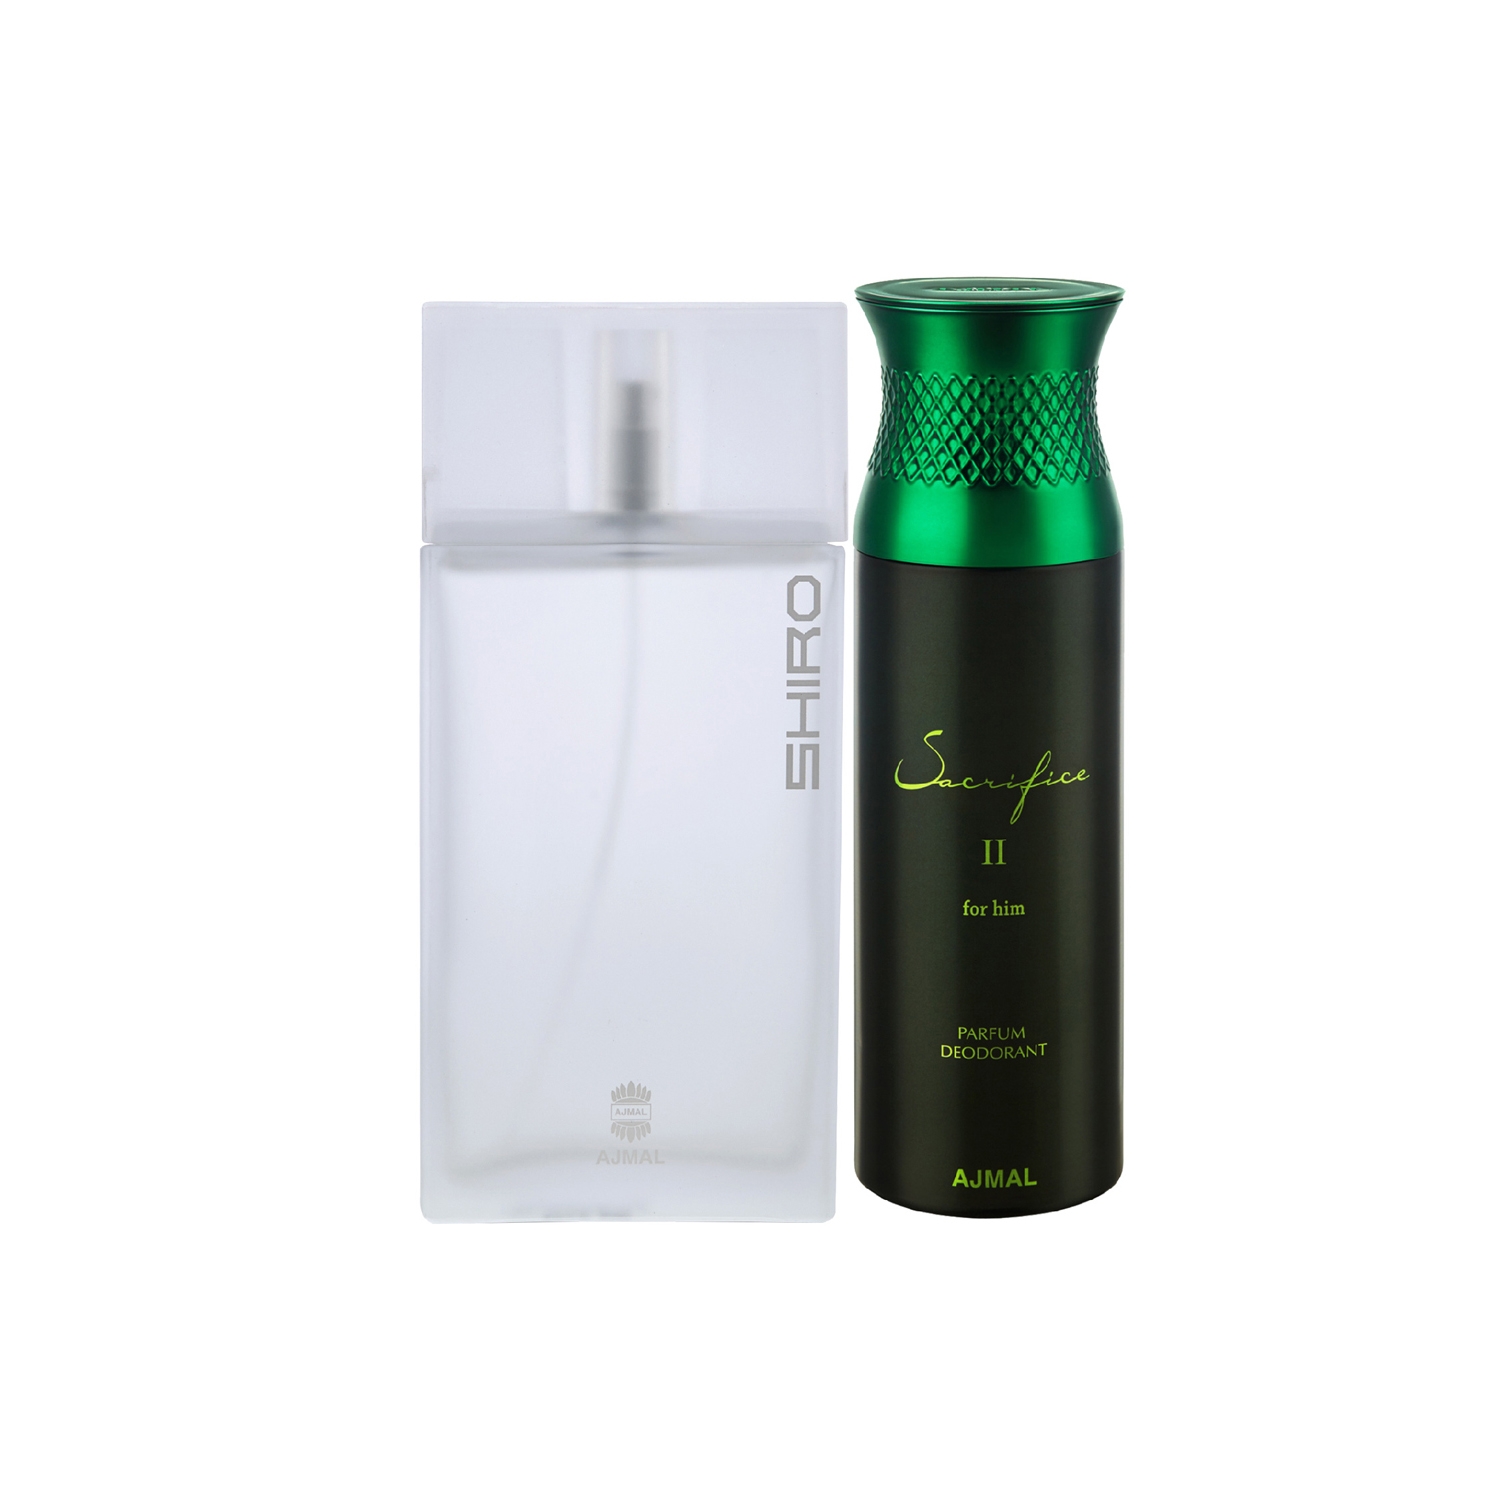 Ajmal | Ajmal  Shiro EDP Citrus Spicy Perfume 90ml for Men and Sacrifice II for Him Deodorant Fruity Aromatic Fragrance 200ml for Men+ 2 Parfum Testers FREE